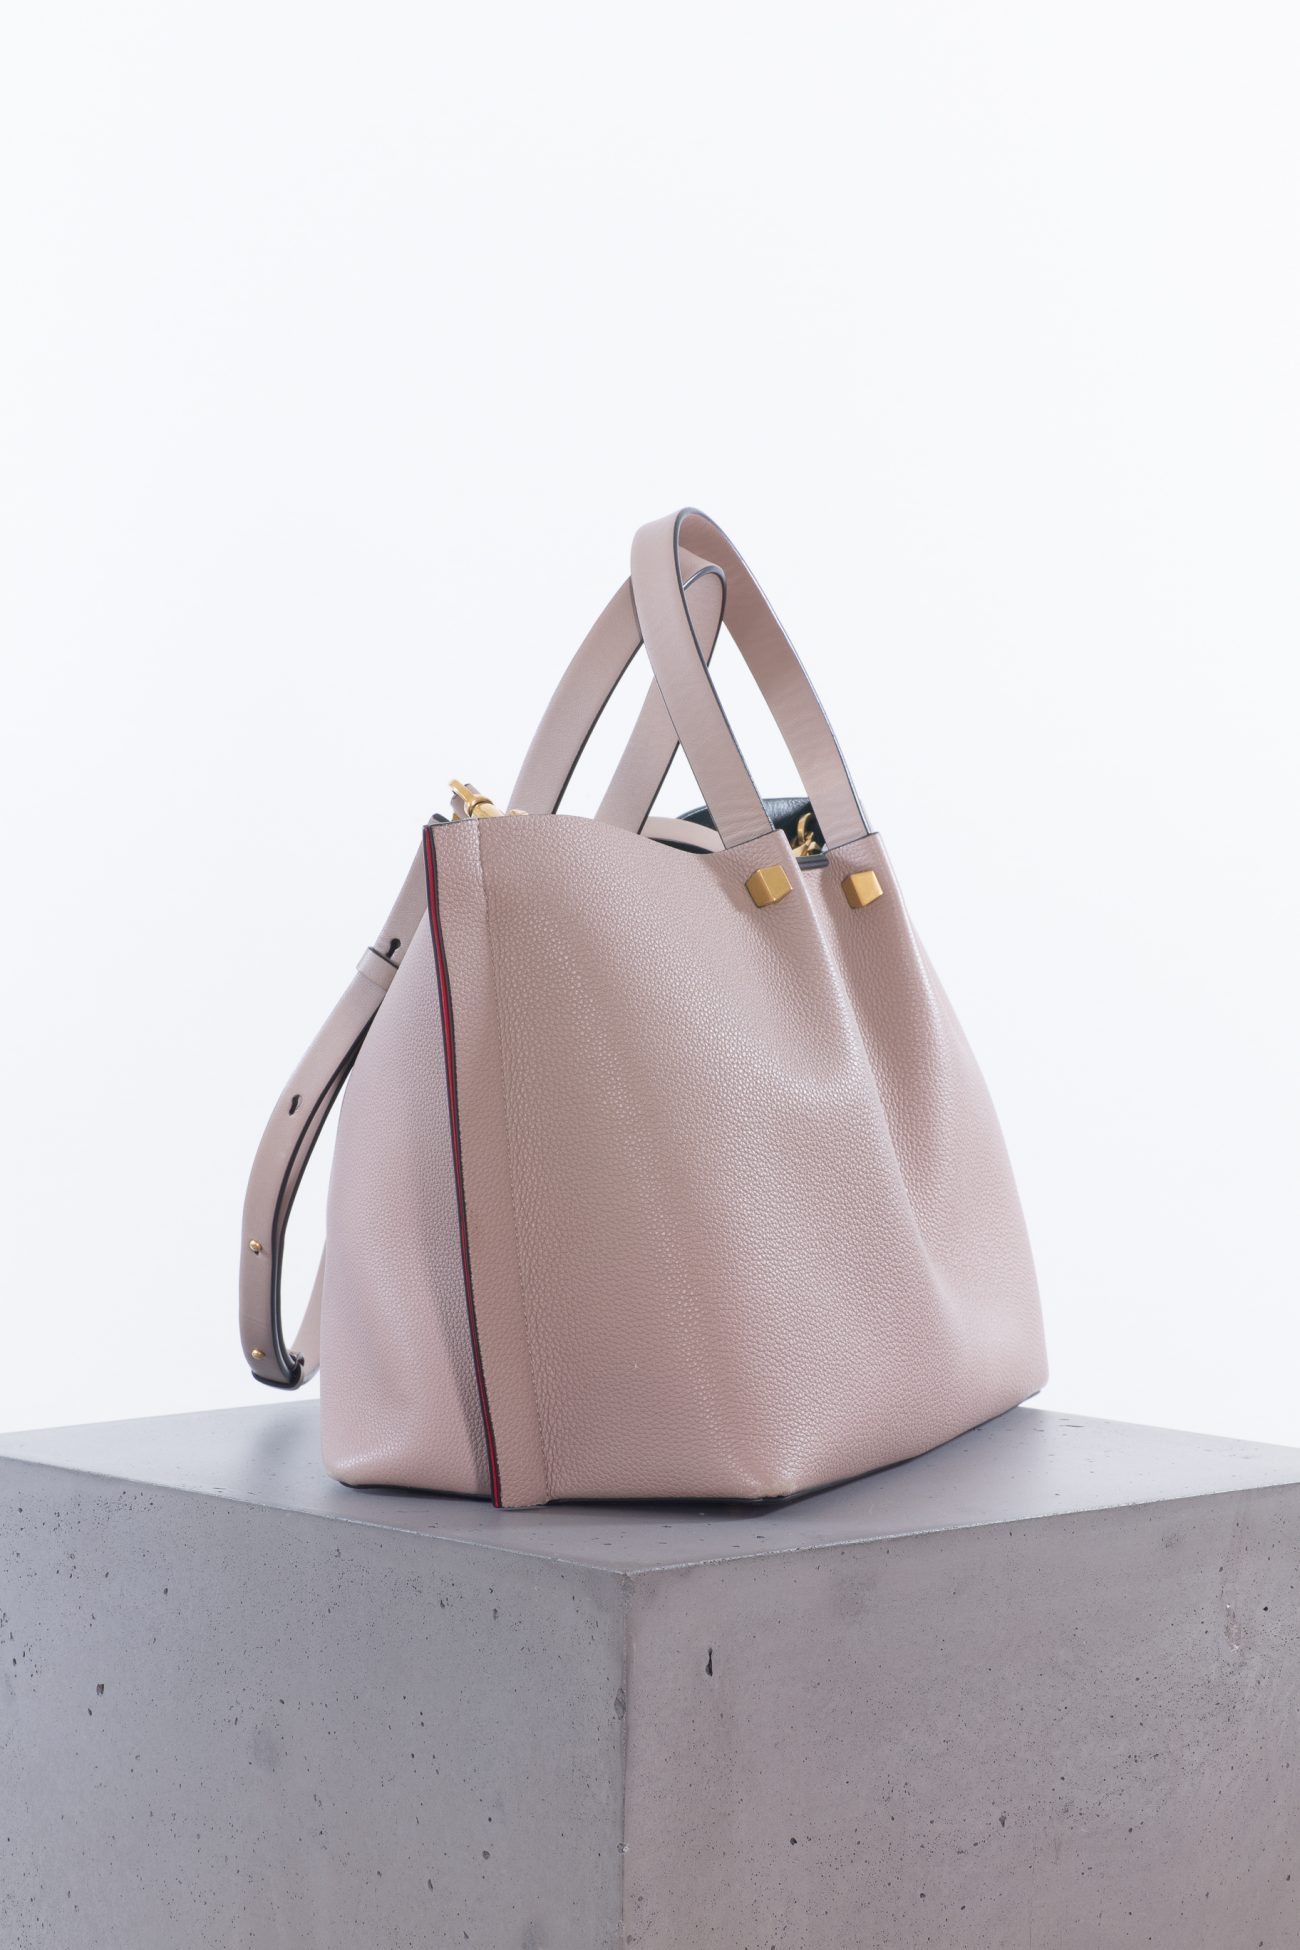 Valentino Bag - Huntessa Luxury Online Consignment Boutique